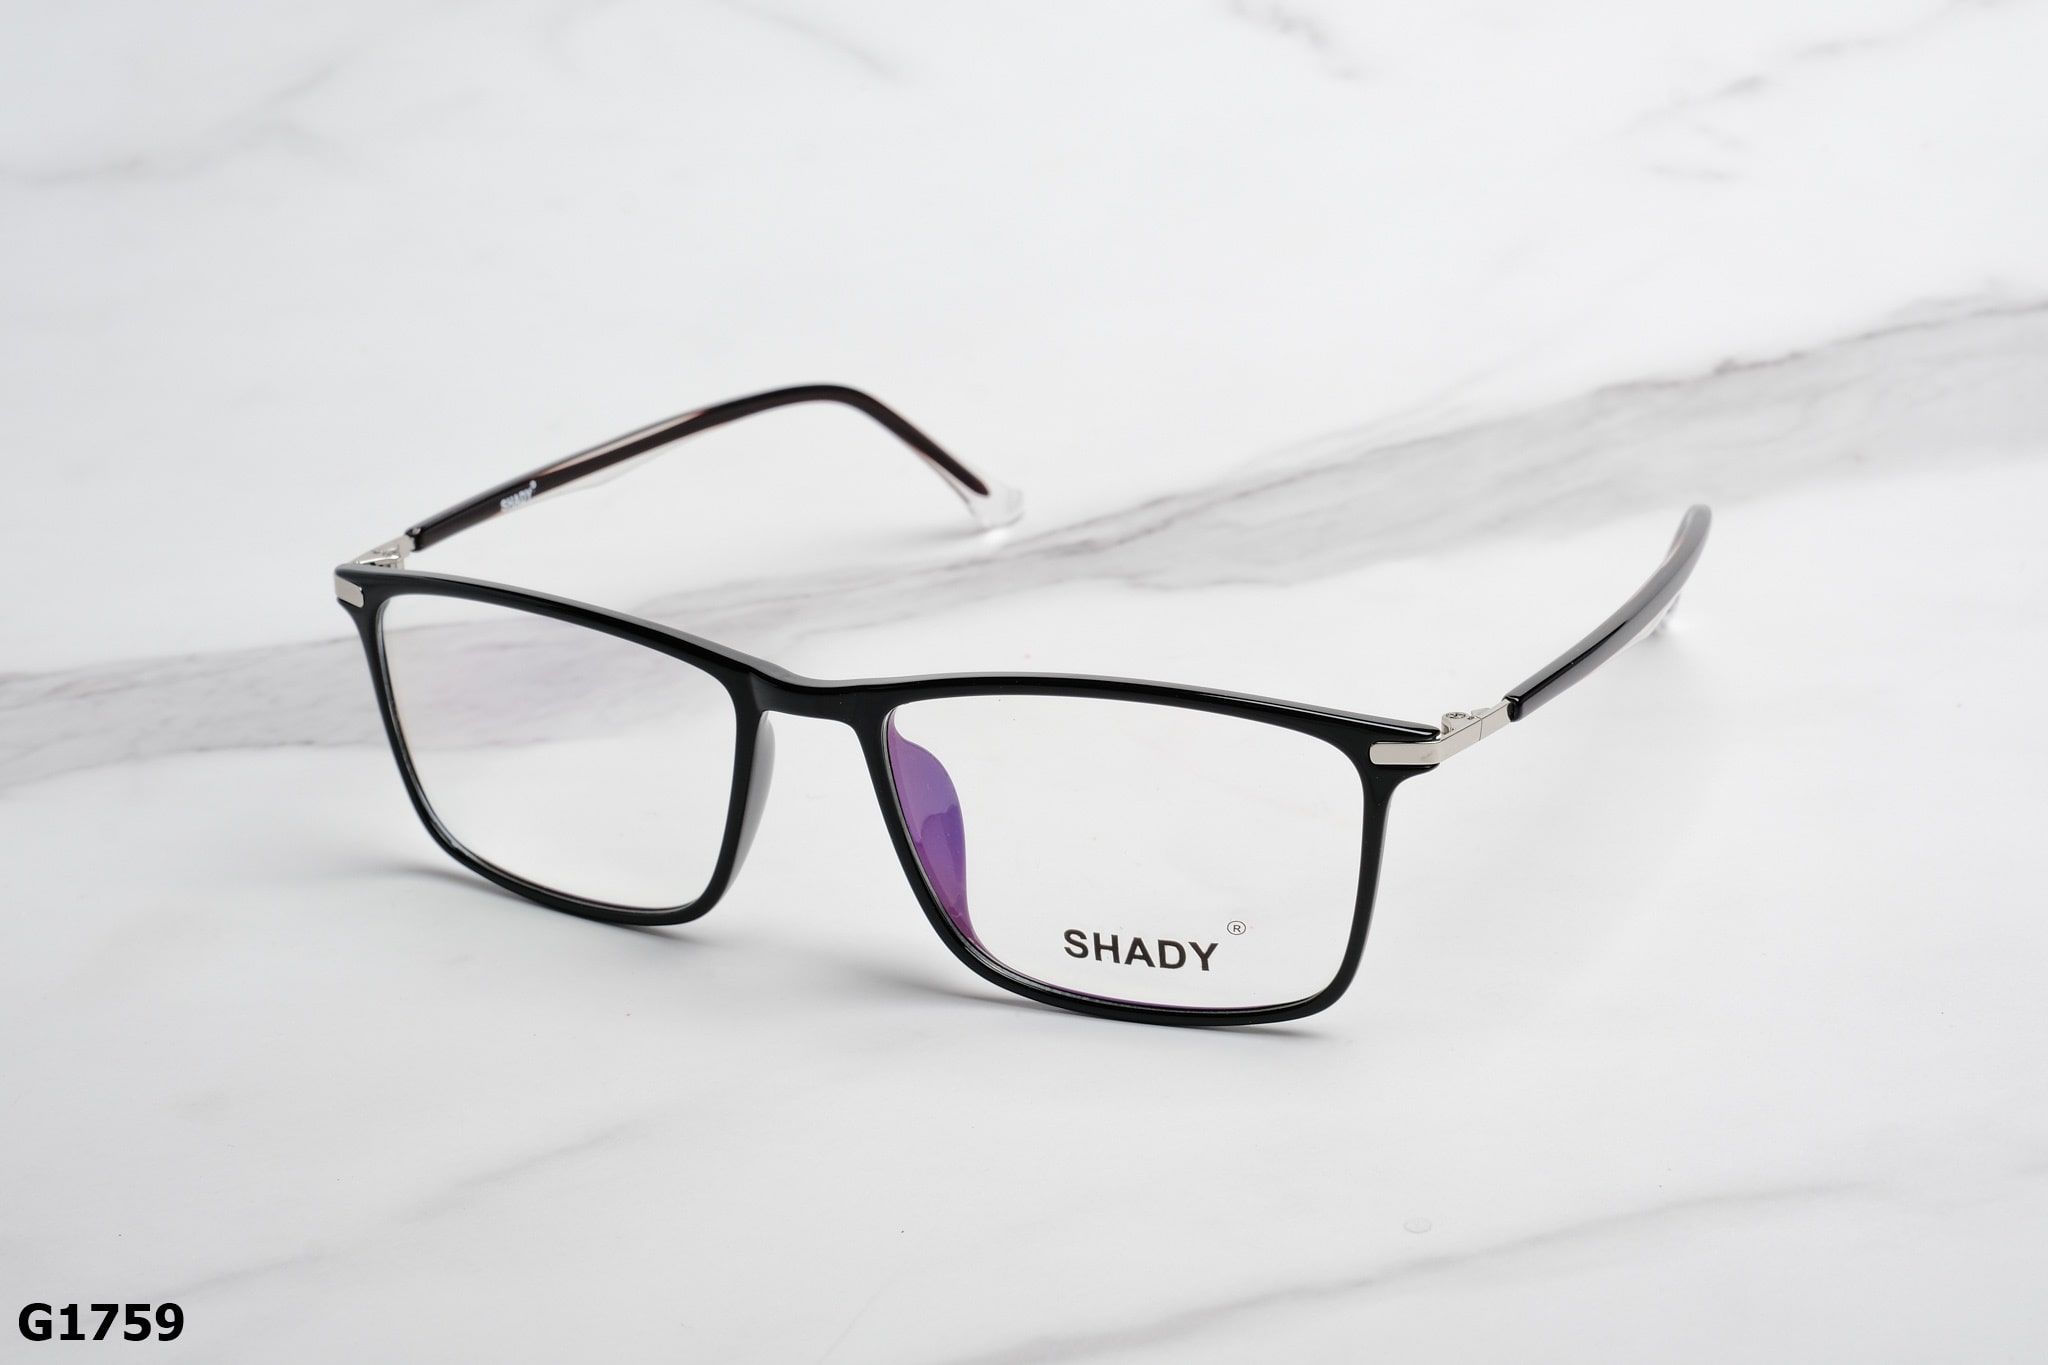  SHADY Eyewear - Glasses - G1759 